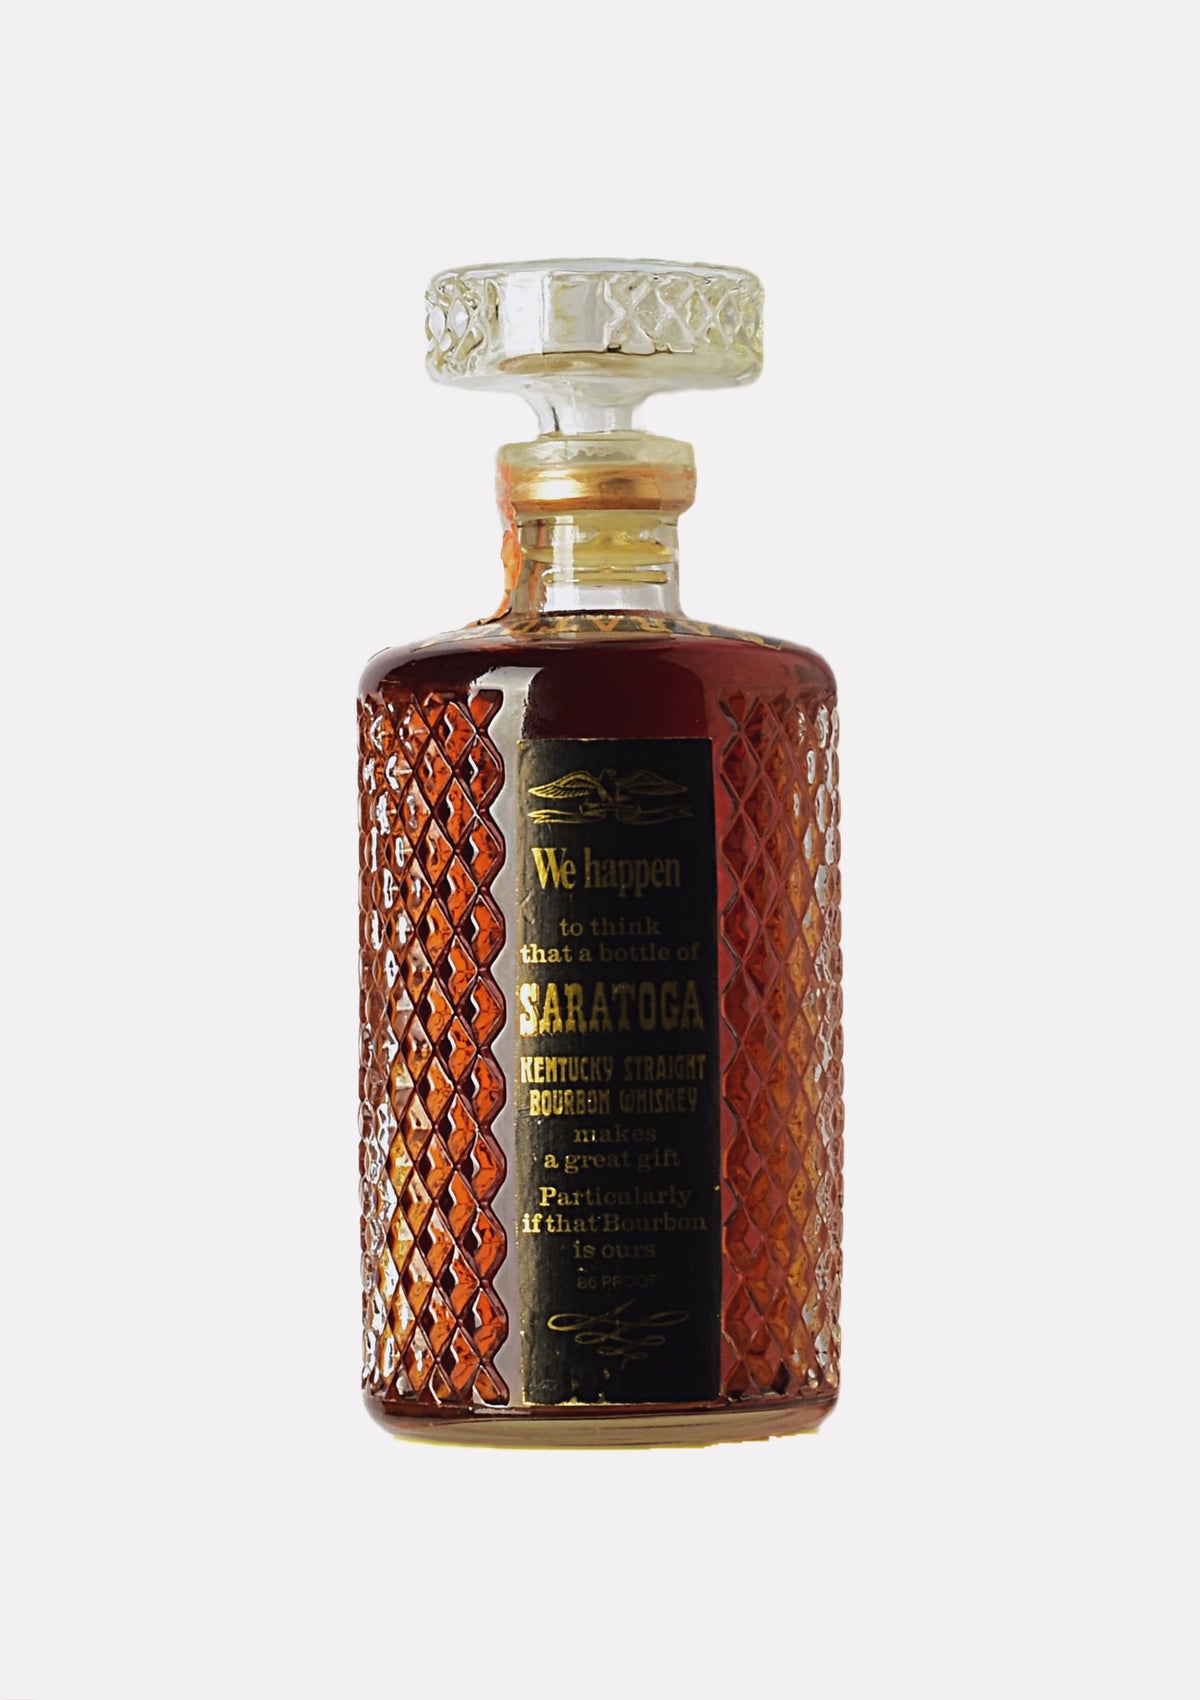 Saratoga Kentucky Straight Bourbon Whiskey